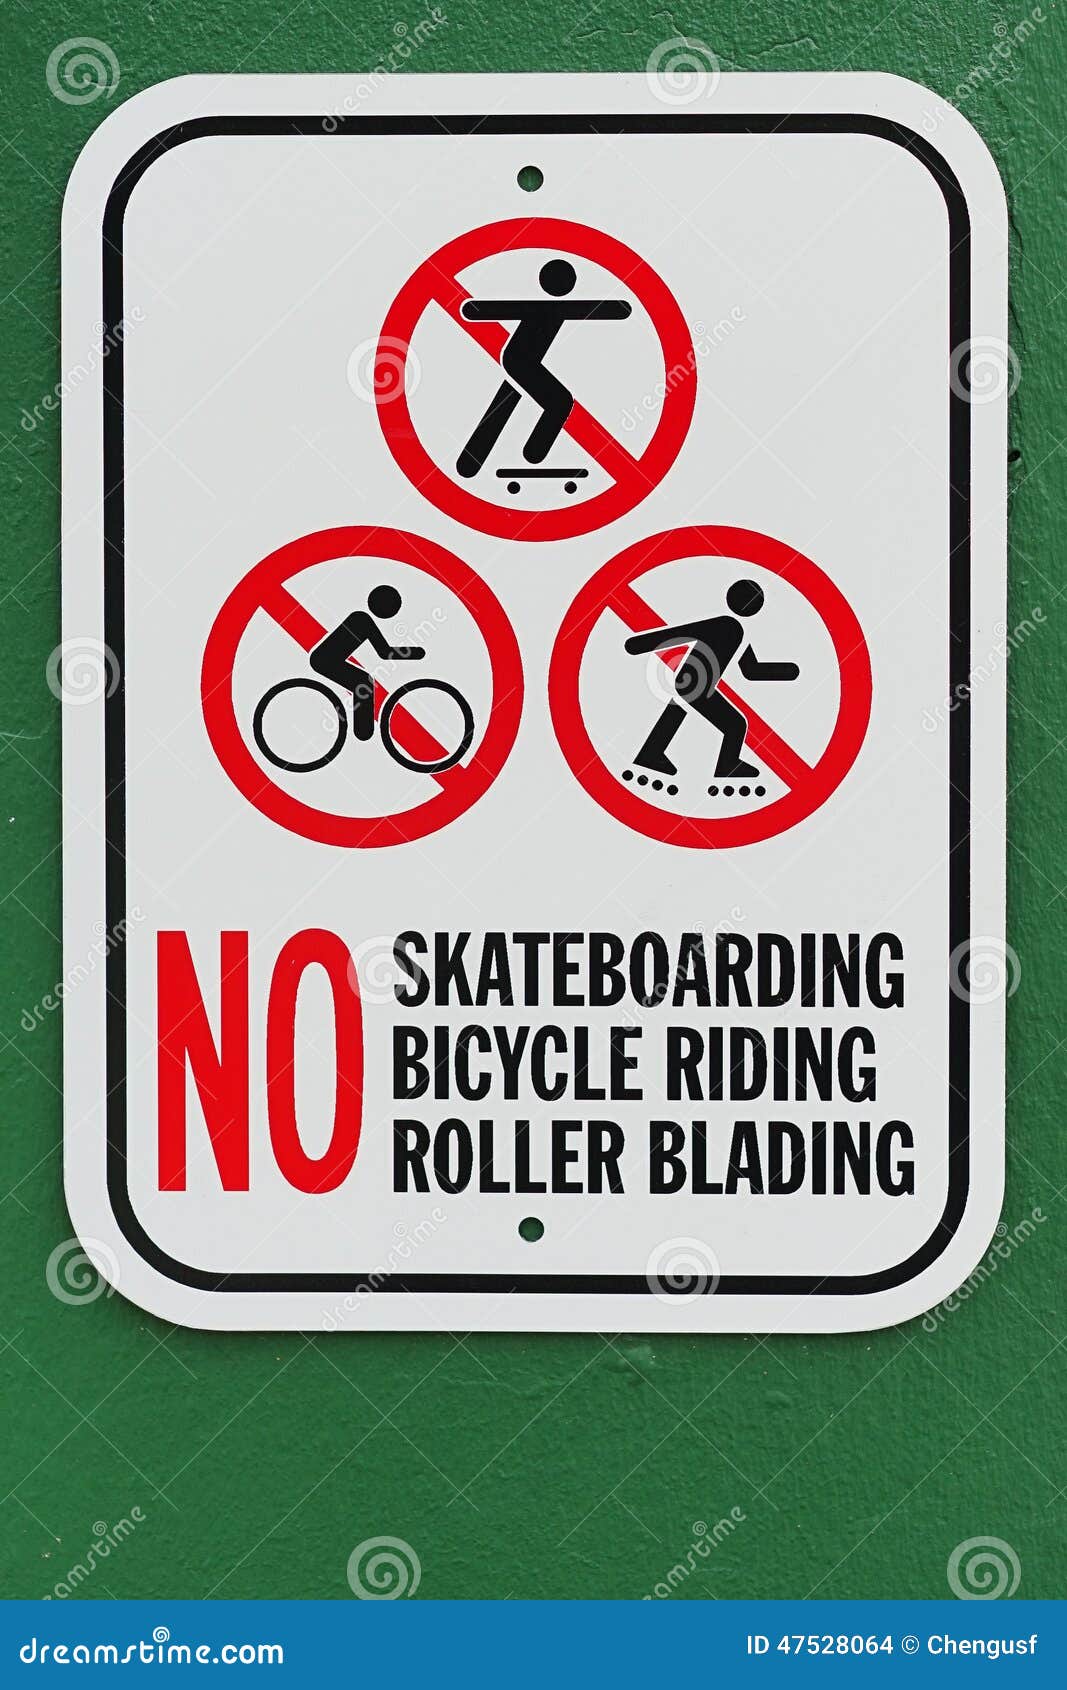 NEW OFFICIAL "NO SKATEBOARDING ROLLER BLADING" 